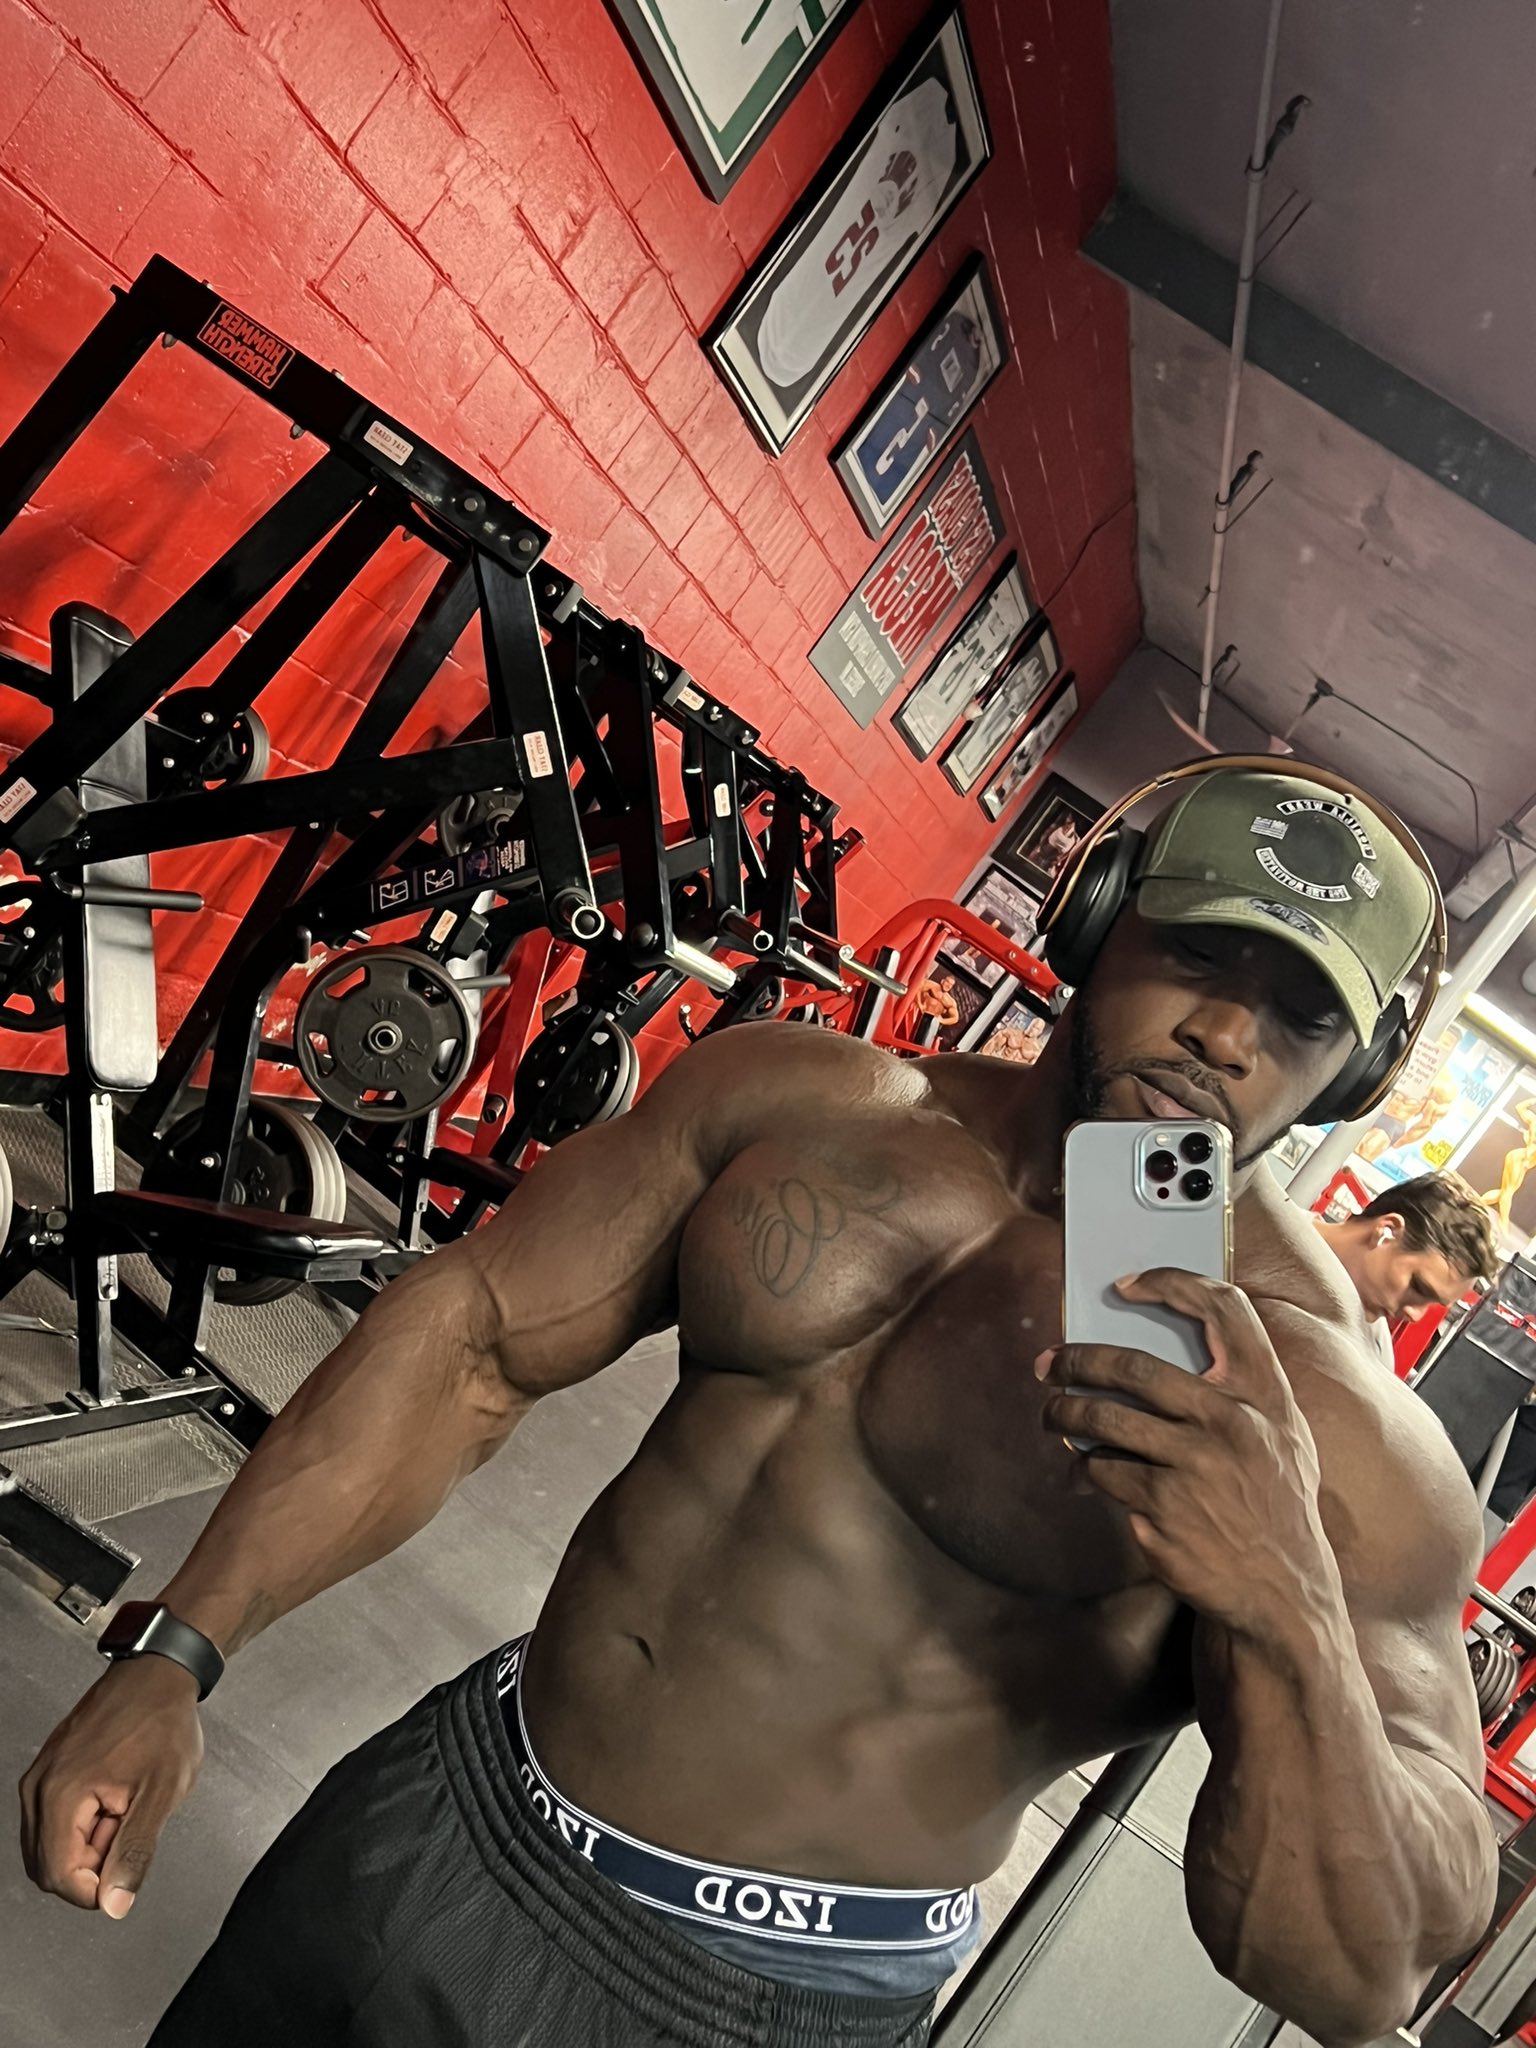 JB on X: Manifest it, speak it, believe it #positivevibes #positiveenergy  #physique #selfie #catchmeoutside #dadbod #fitness #health #energy #goals  #gym #inspire #gymmotivation #fitnessaddict #zaddy #love #selfdevelopment  #sayitwithyourchest ...